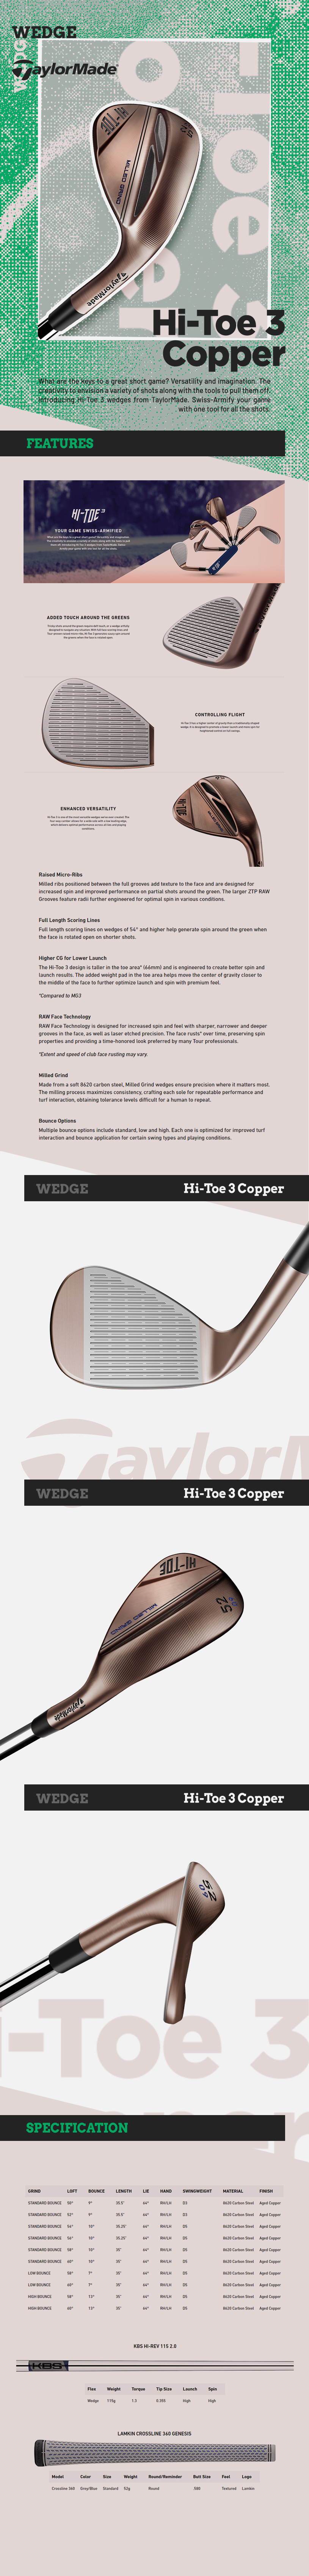 Hi-Toe-3-Copper-Wedge_desc.jpg